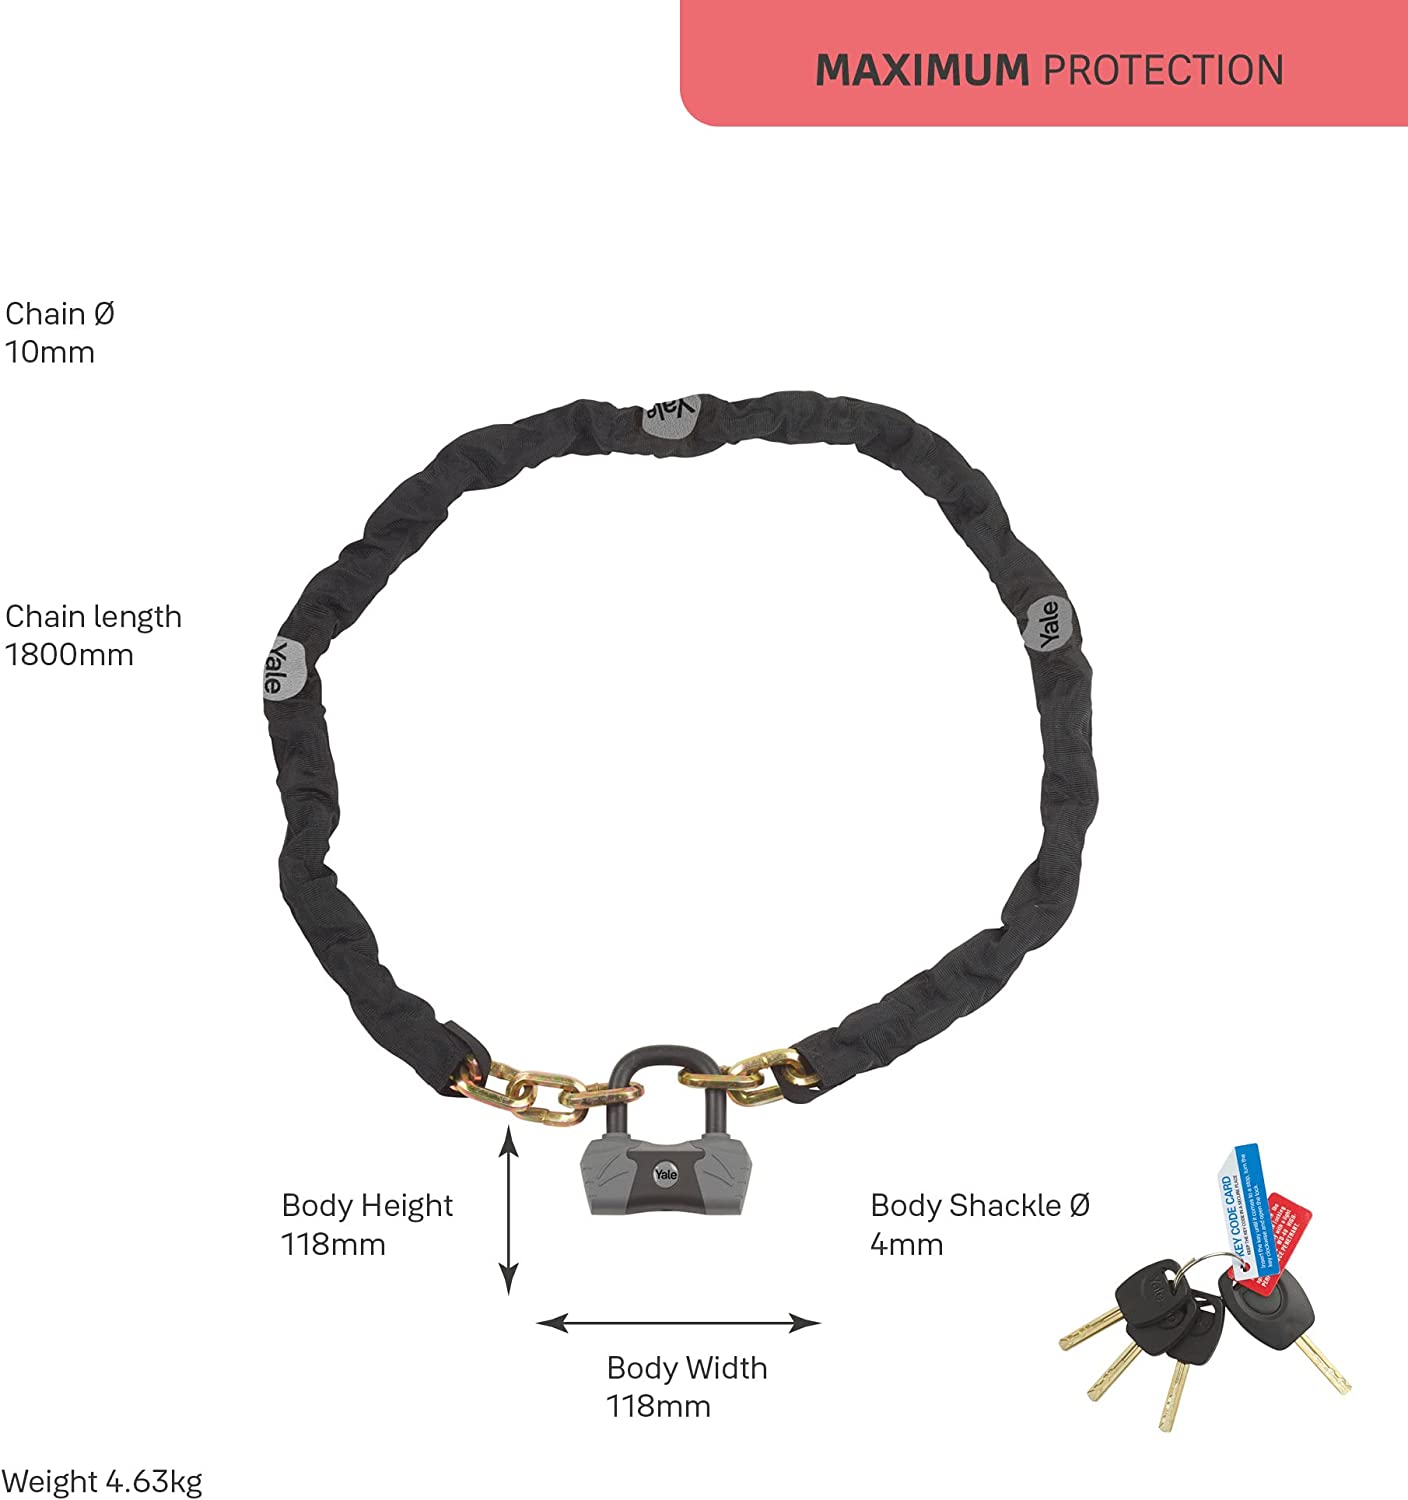 Yale 1.8m Maximum Security Chain Bike Lock with 4 Keys